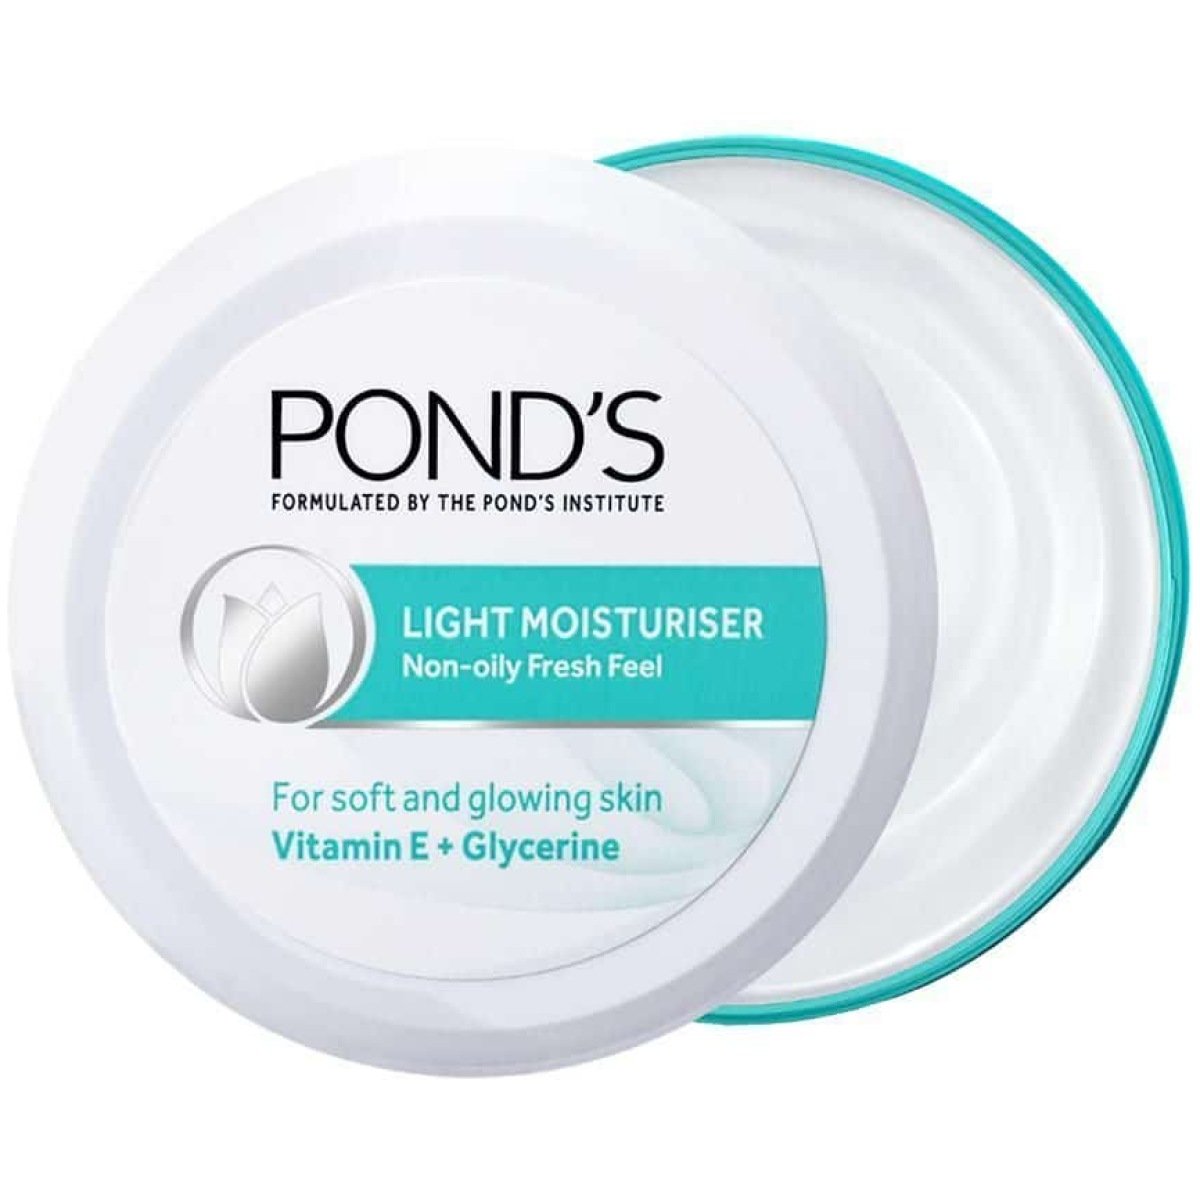 Pond’s Light Moisturiser Non-Oily Fresh Feel With Vitamin E + Glycerine 250 ml